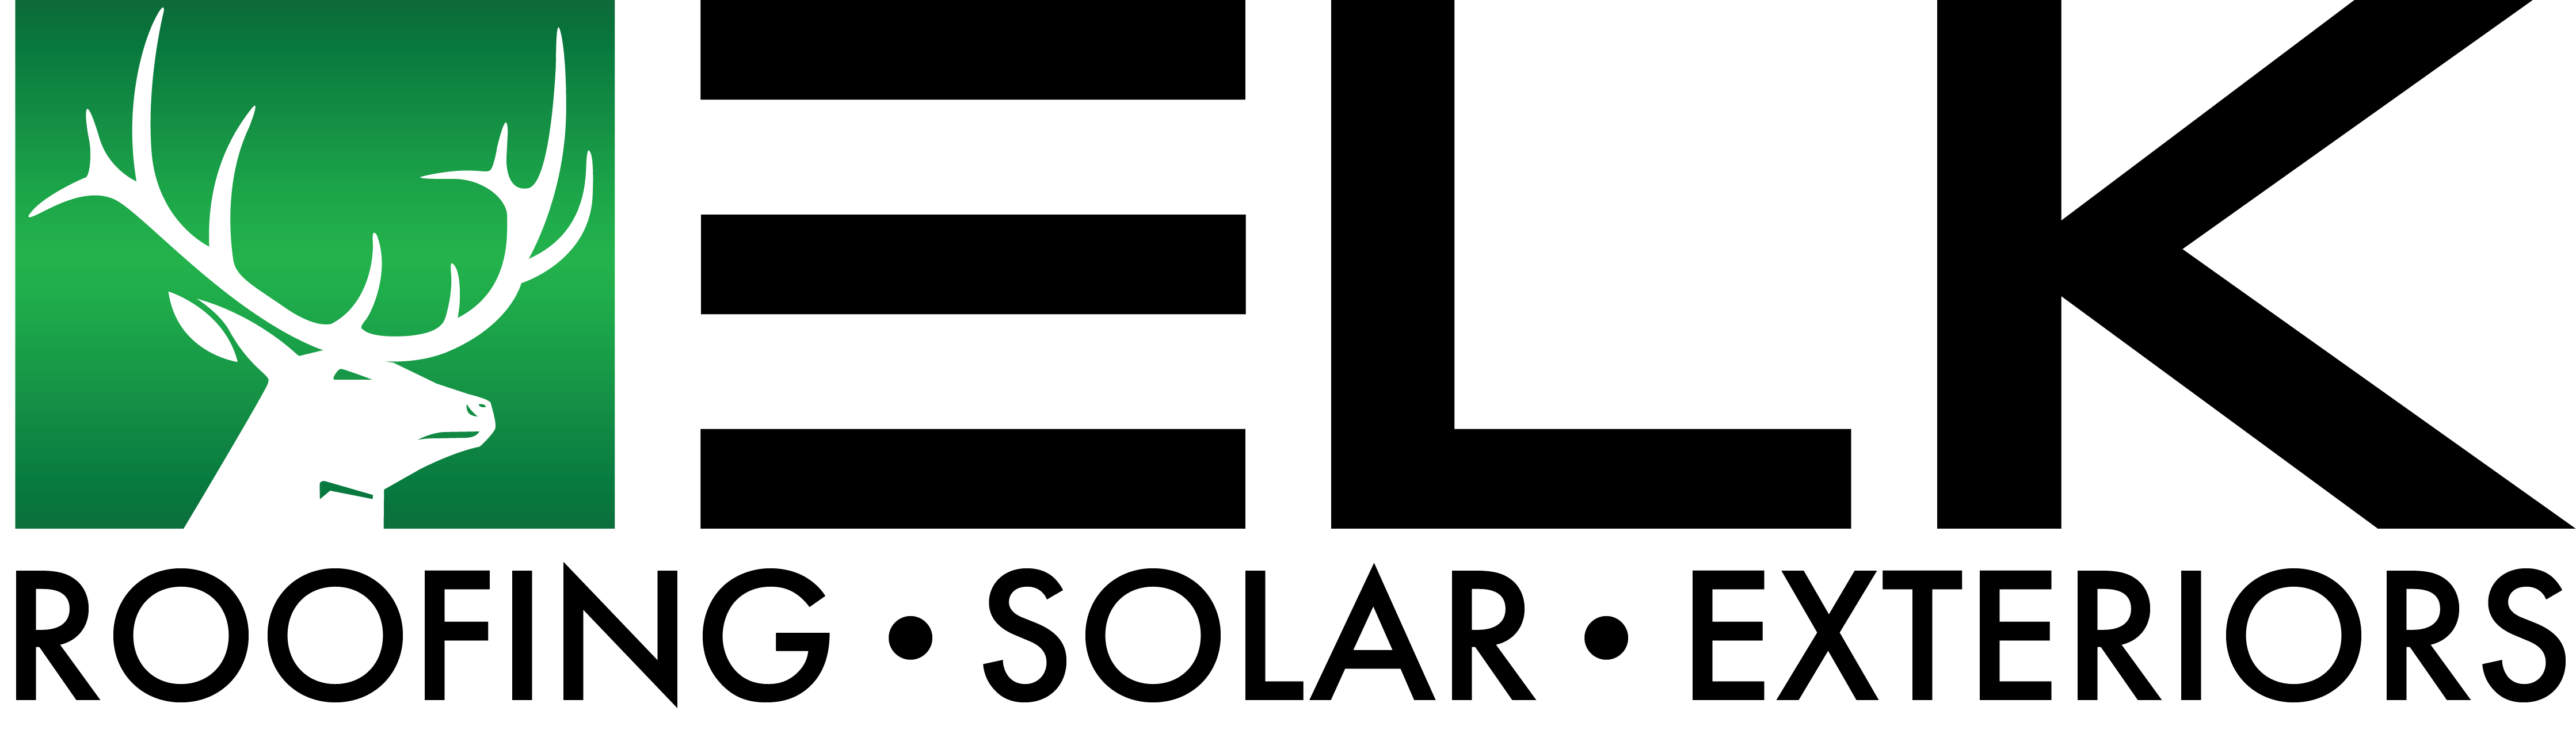 ELK Roofing • Solar • Exteriors - Denver roofing contractors